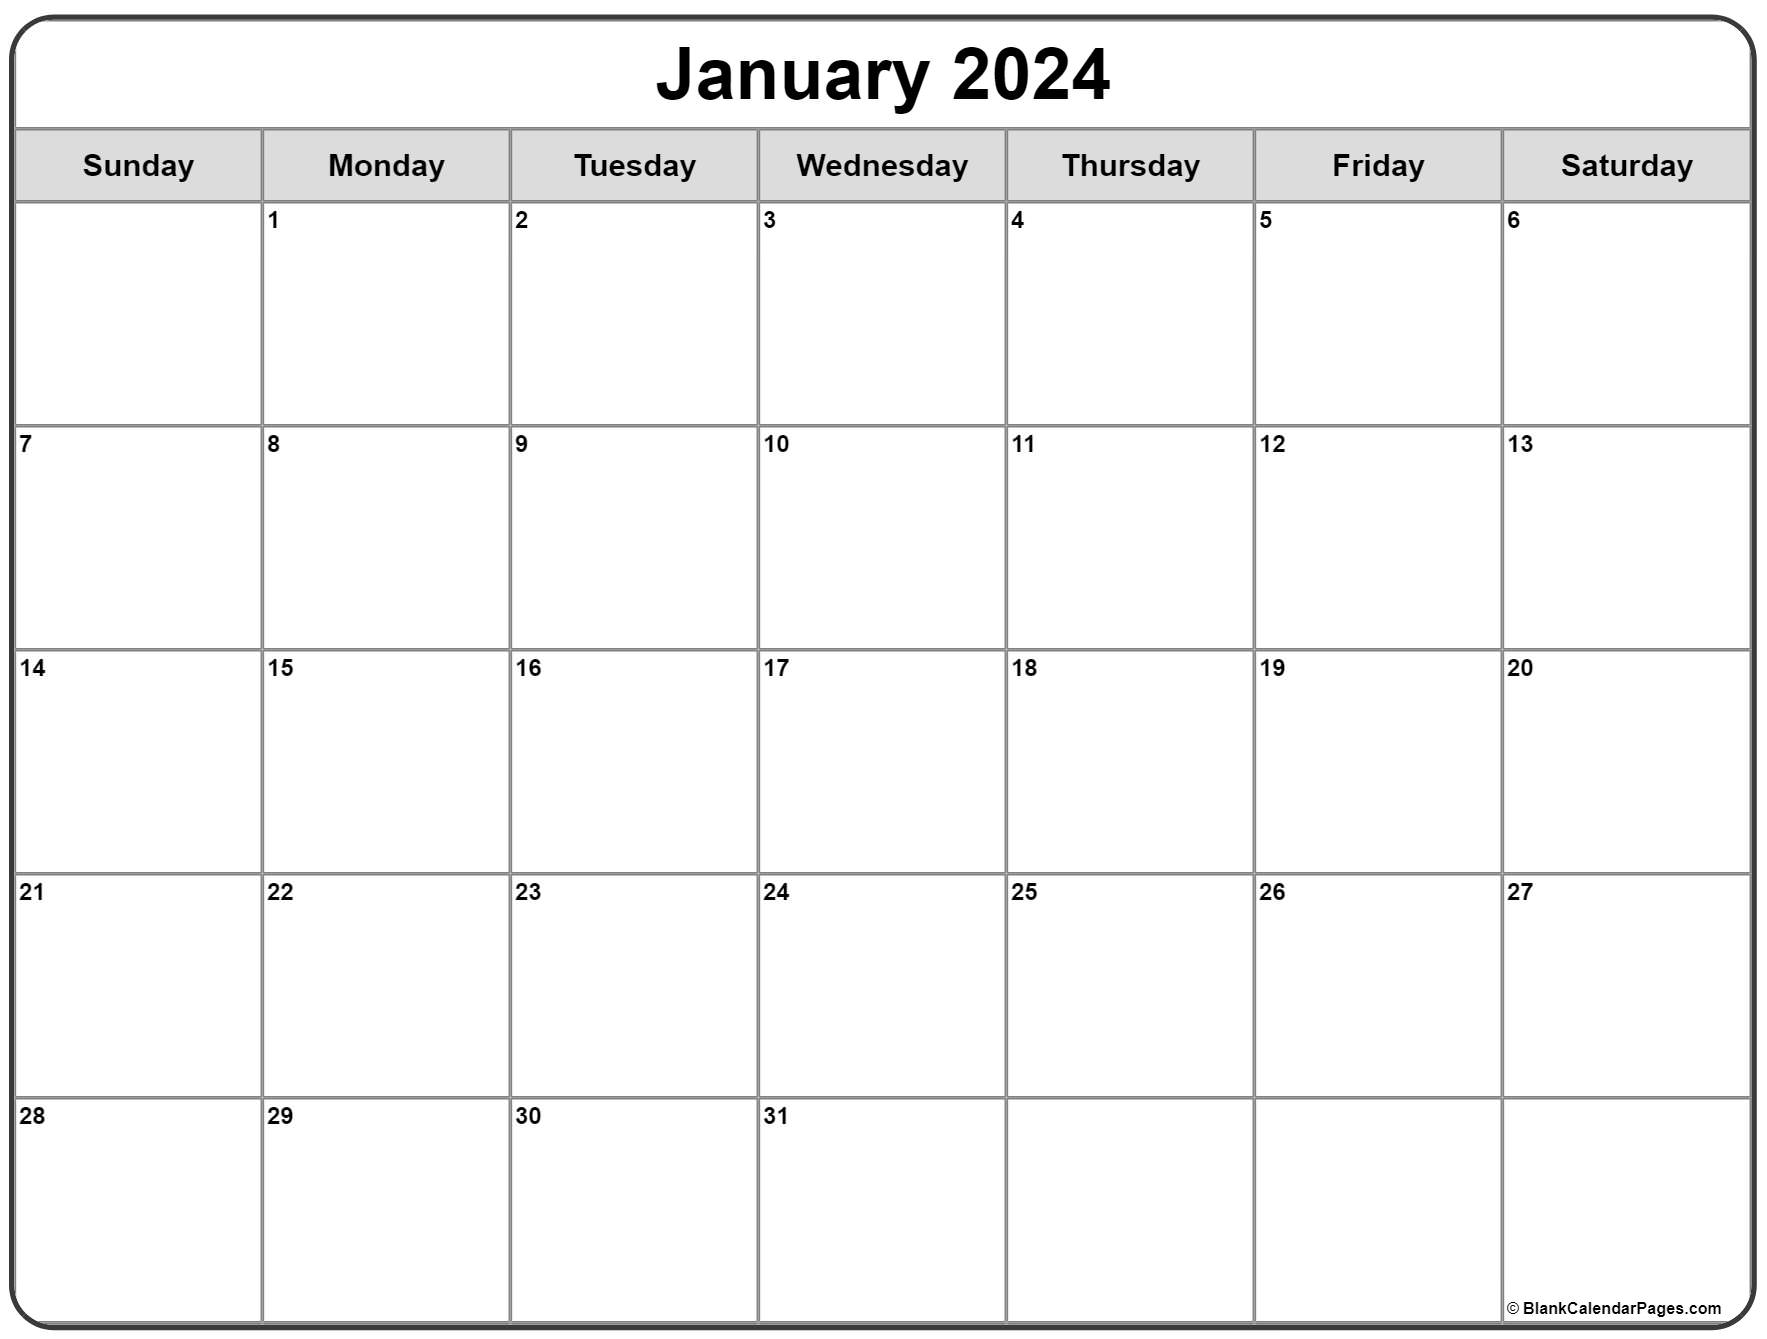 January 2023 calendar free printable calendar